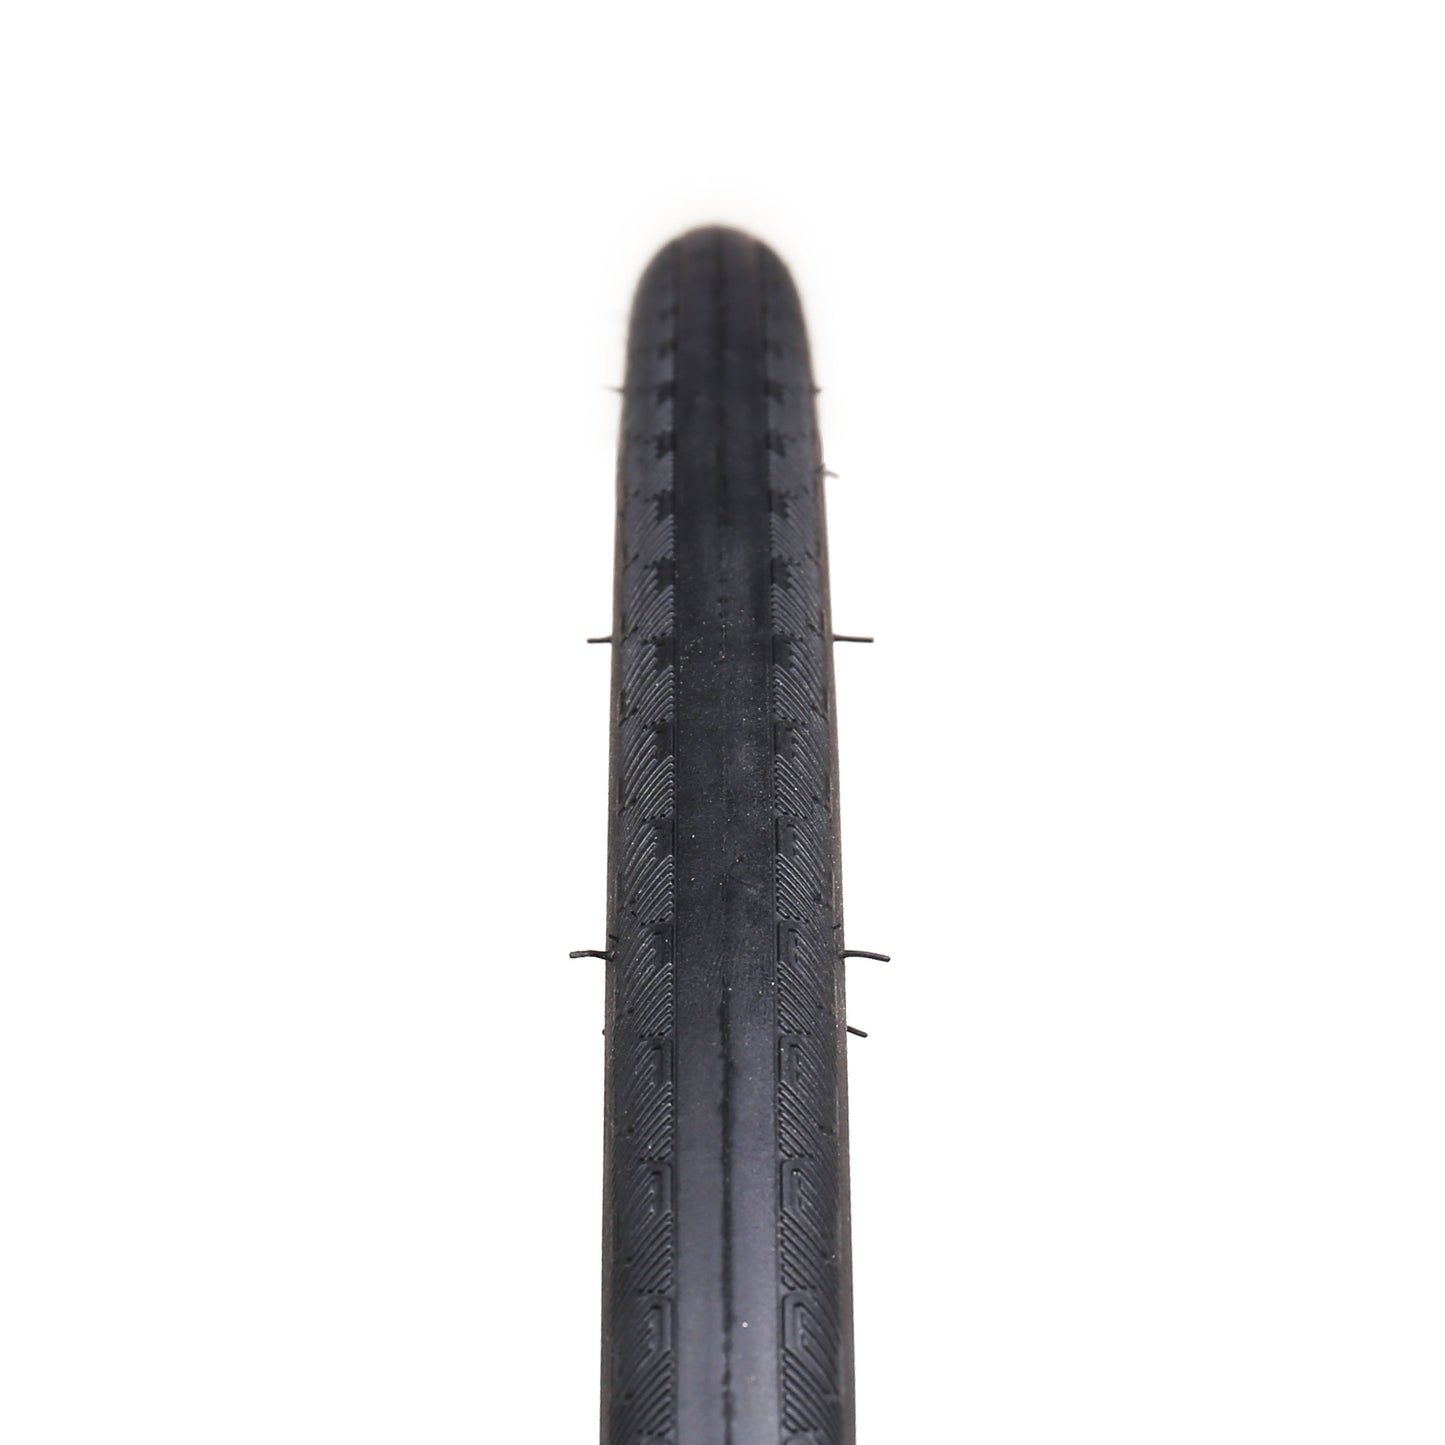 ERE Research EXPLORATOR CL Tyre - Black - 700 x 26c